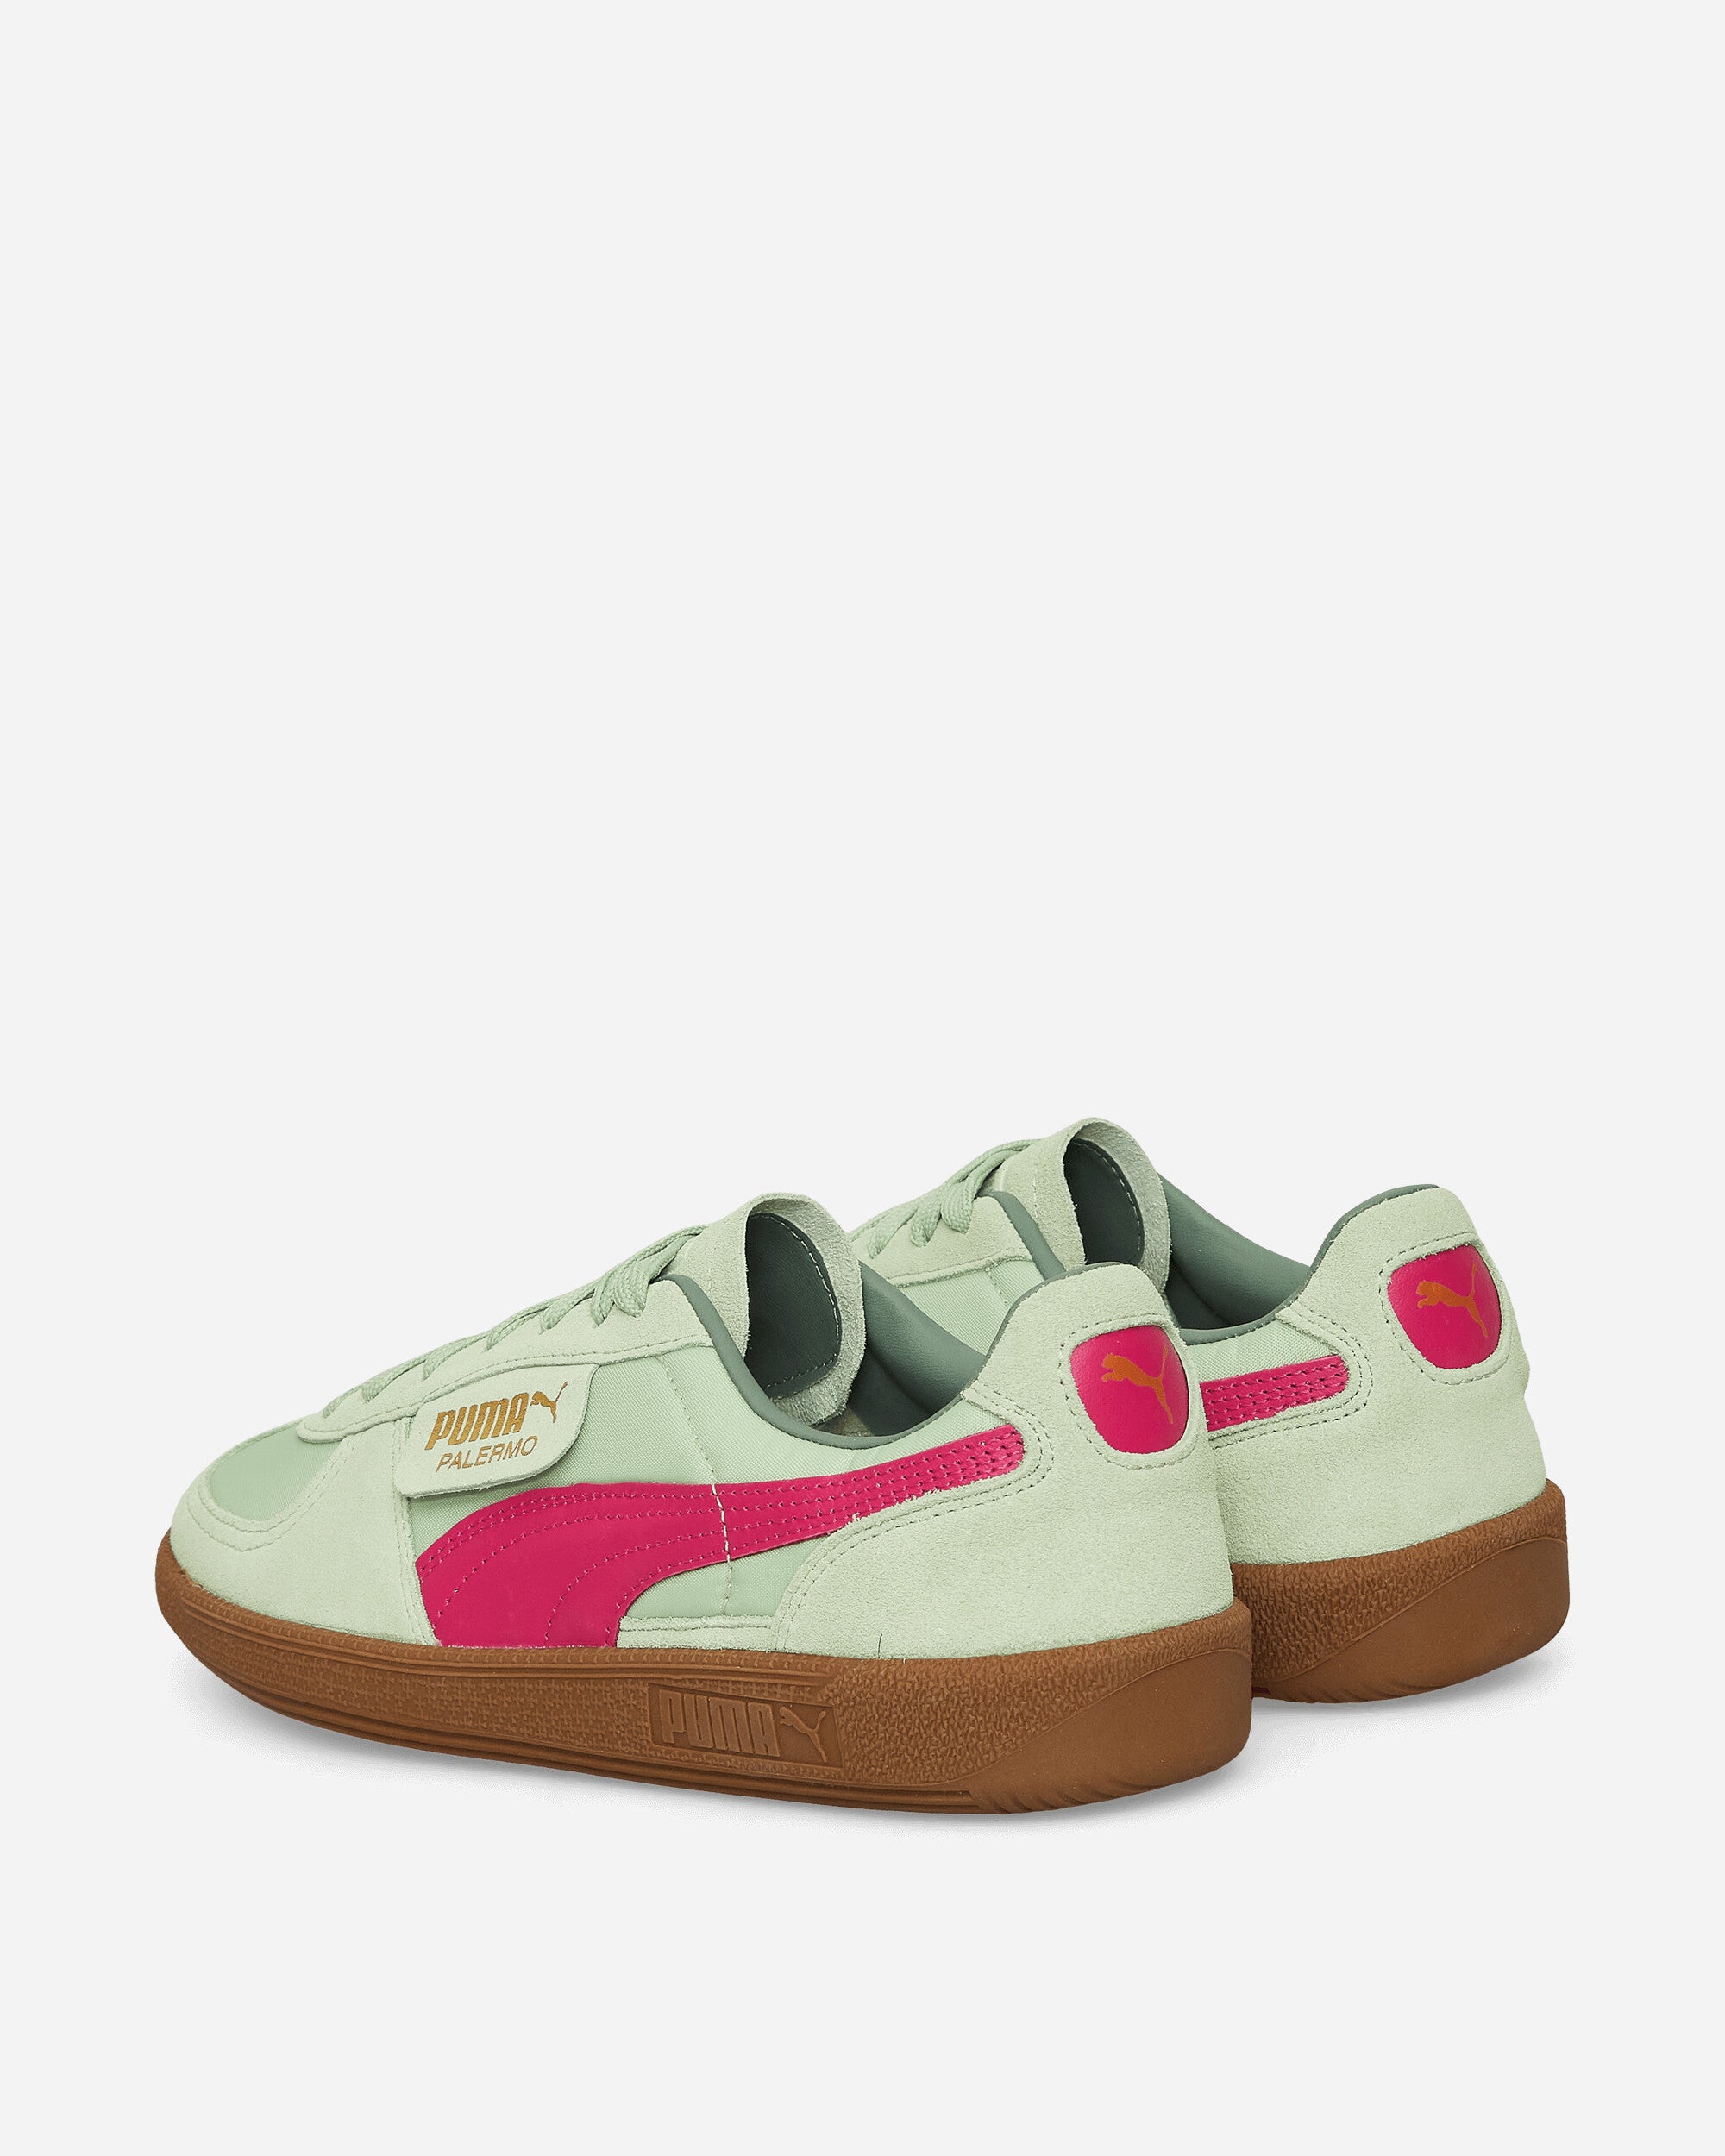 Puma Palermo Og Green Illusion/Garnet Rose Sneakers Low 383011-07